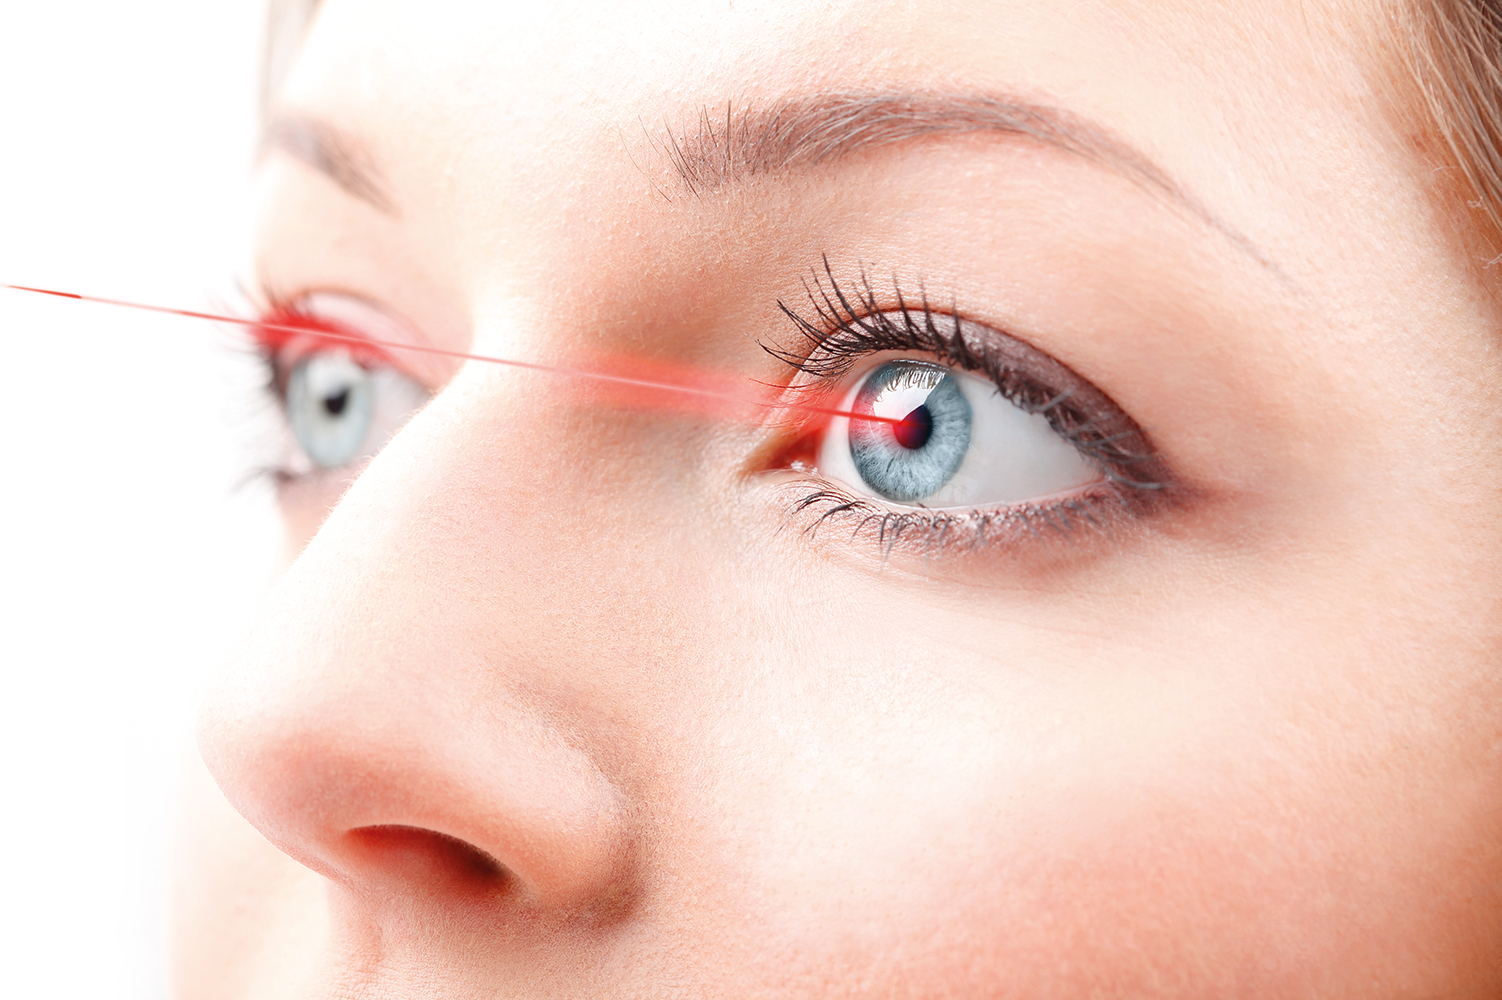 Application-Laser-eye-treatment-iStock